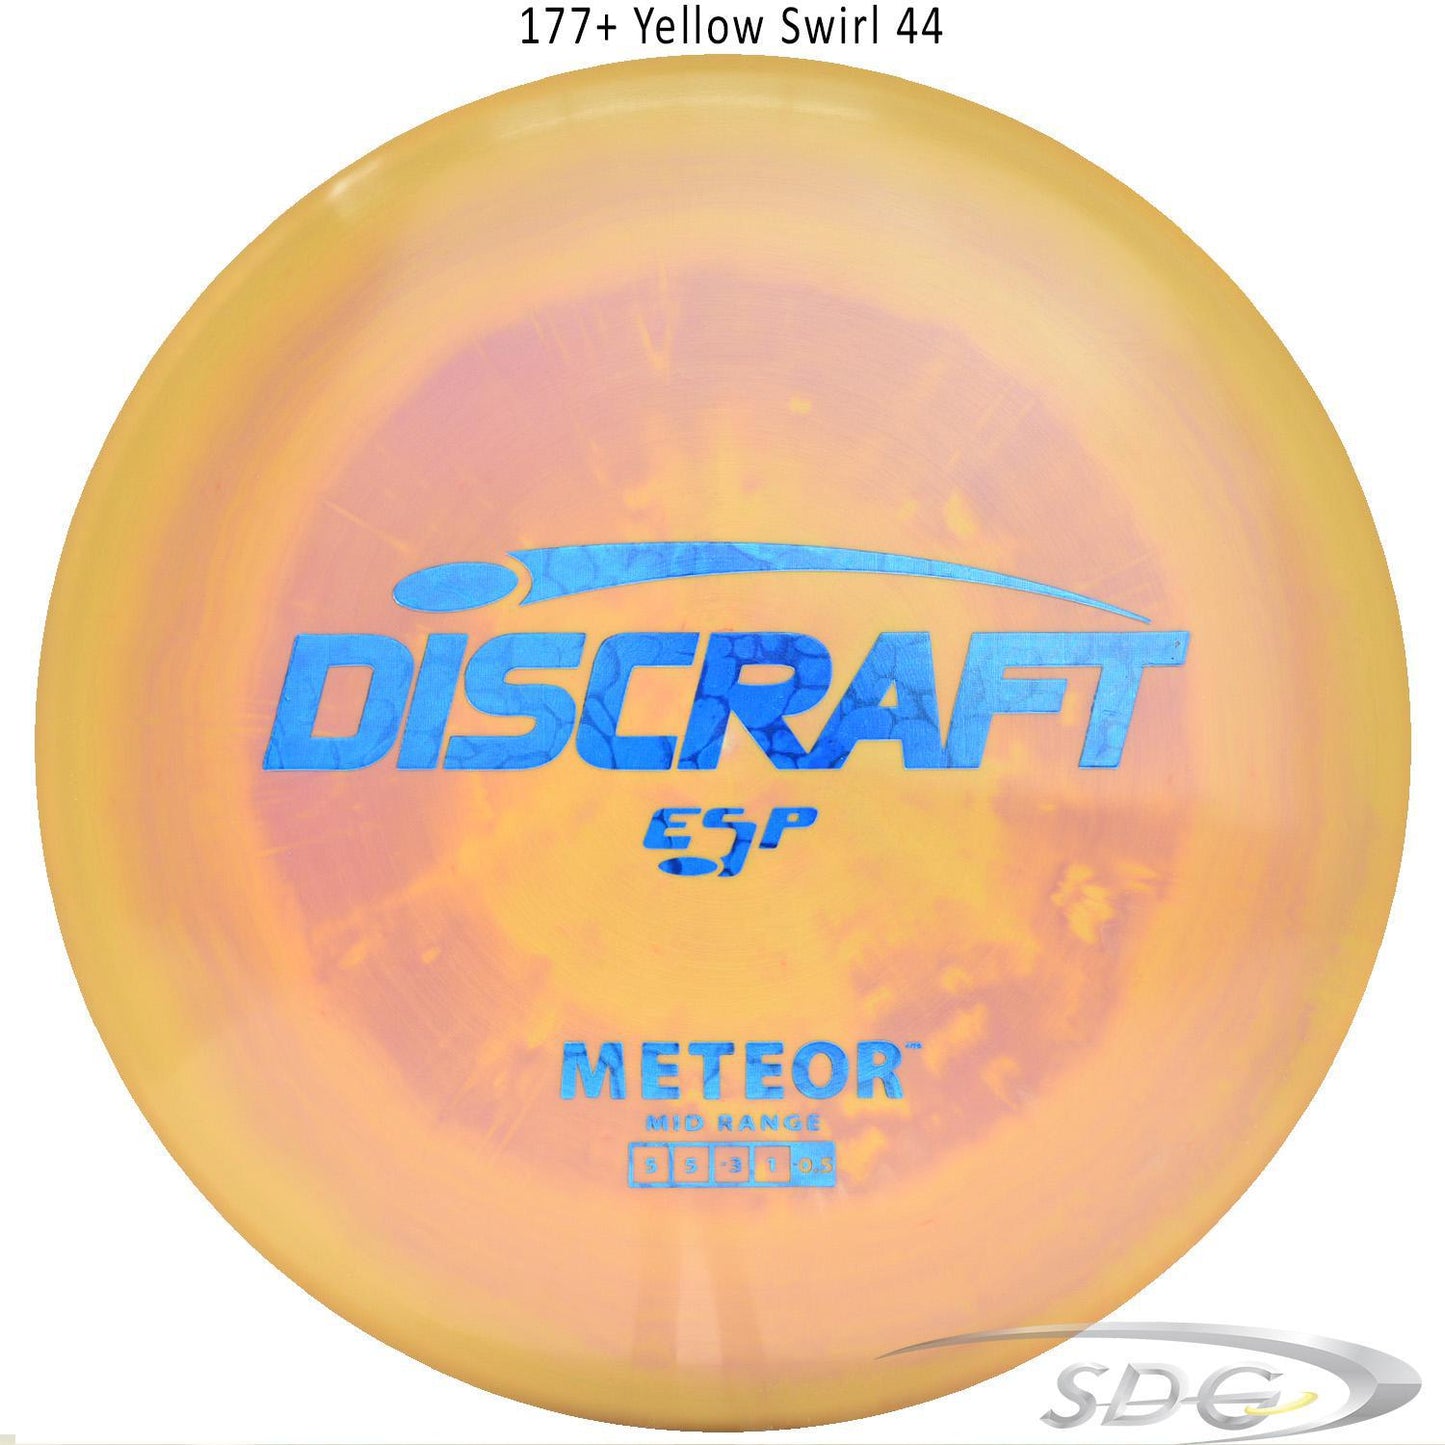 discraft-esp-meteor-disc-golf-mid-range 177+ Yellow Swirl 44 